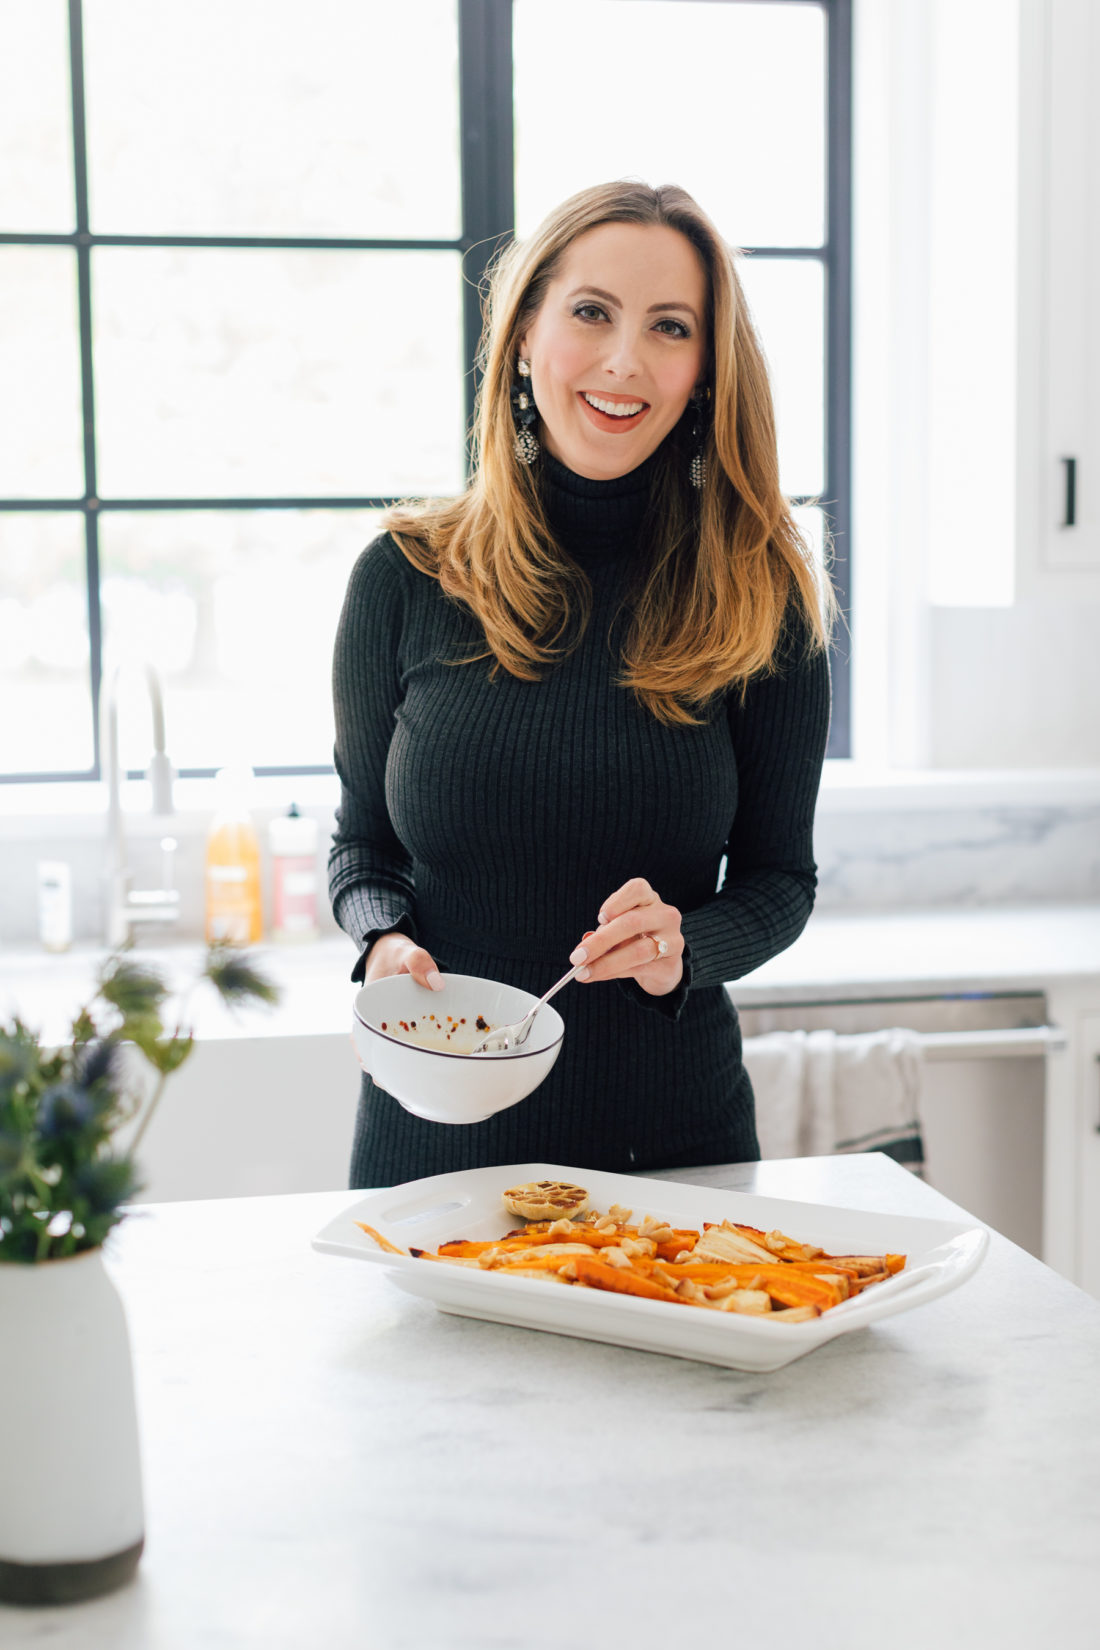 Eva Amurri Martino whips up some Thanksgiving side dishes